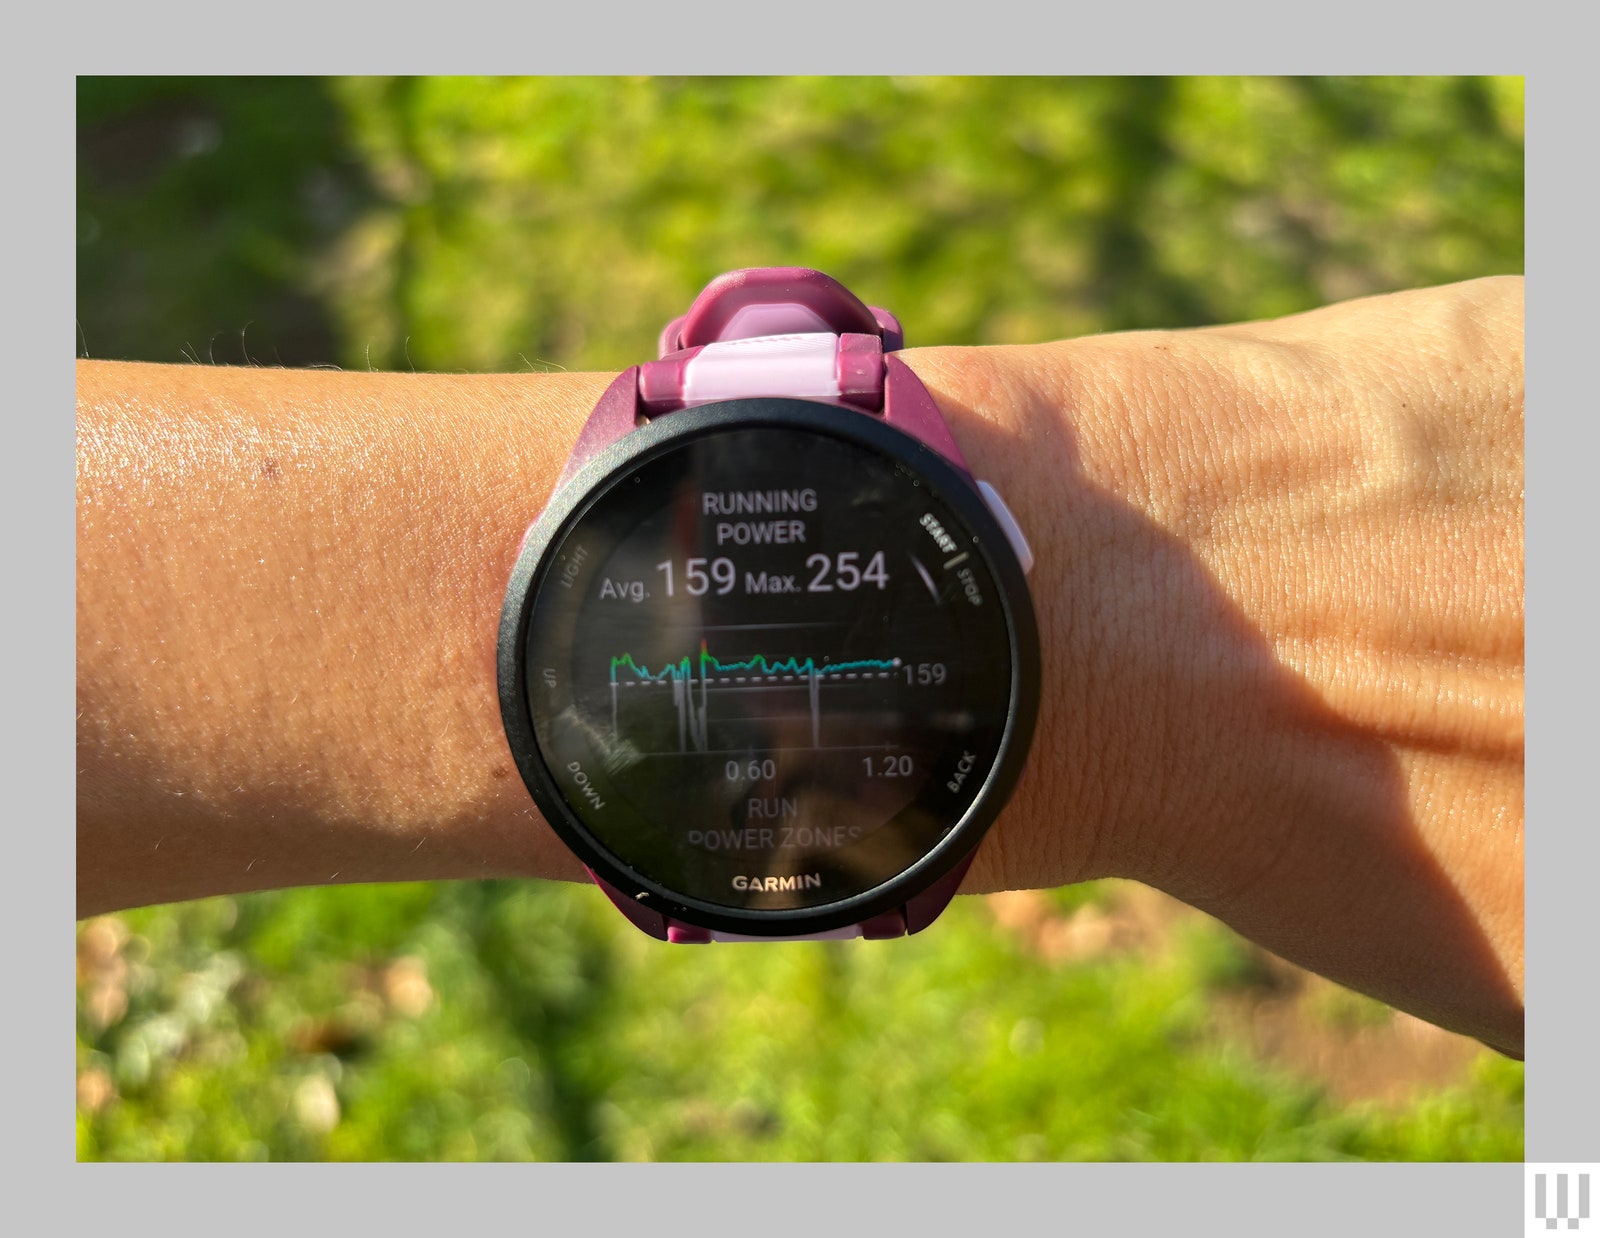 Digital wristwatch screen with running power statistics